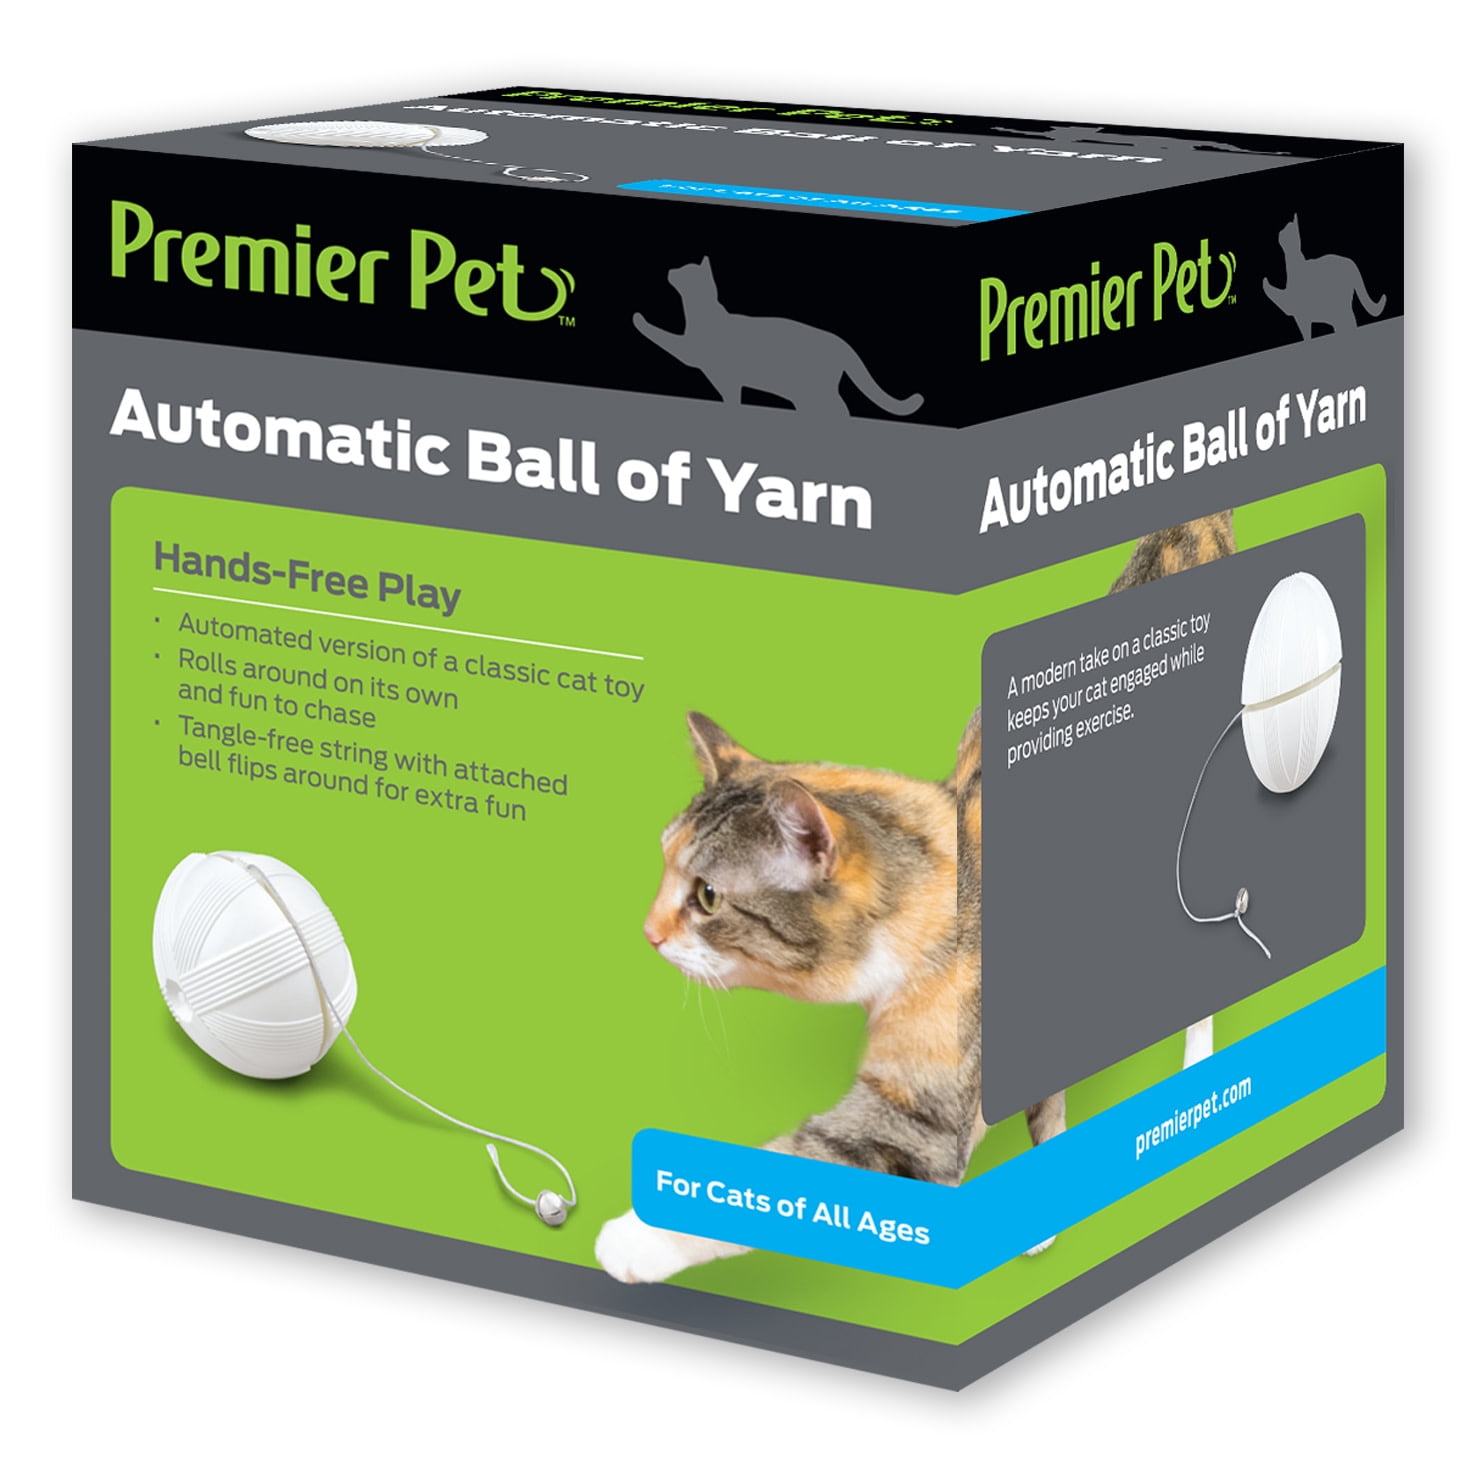 Premier Pet. Electric Automatic Rolling Ball, interactive Kitten Training. Gravitational Rolling Ball для кошек. Cat playing Ball of Yarn. Премьер для кошек купить